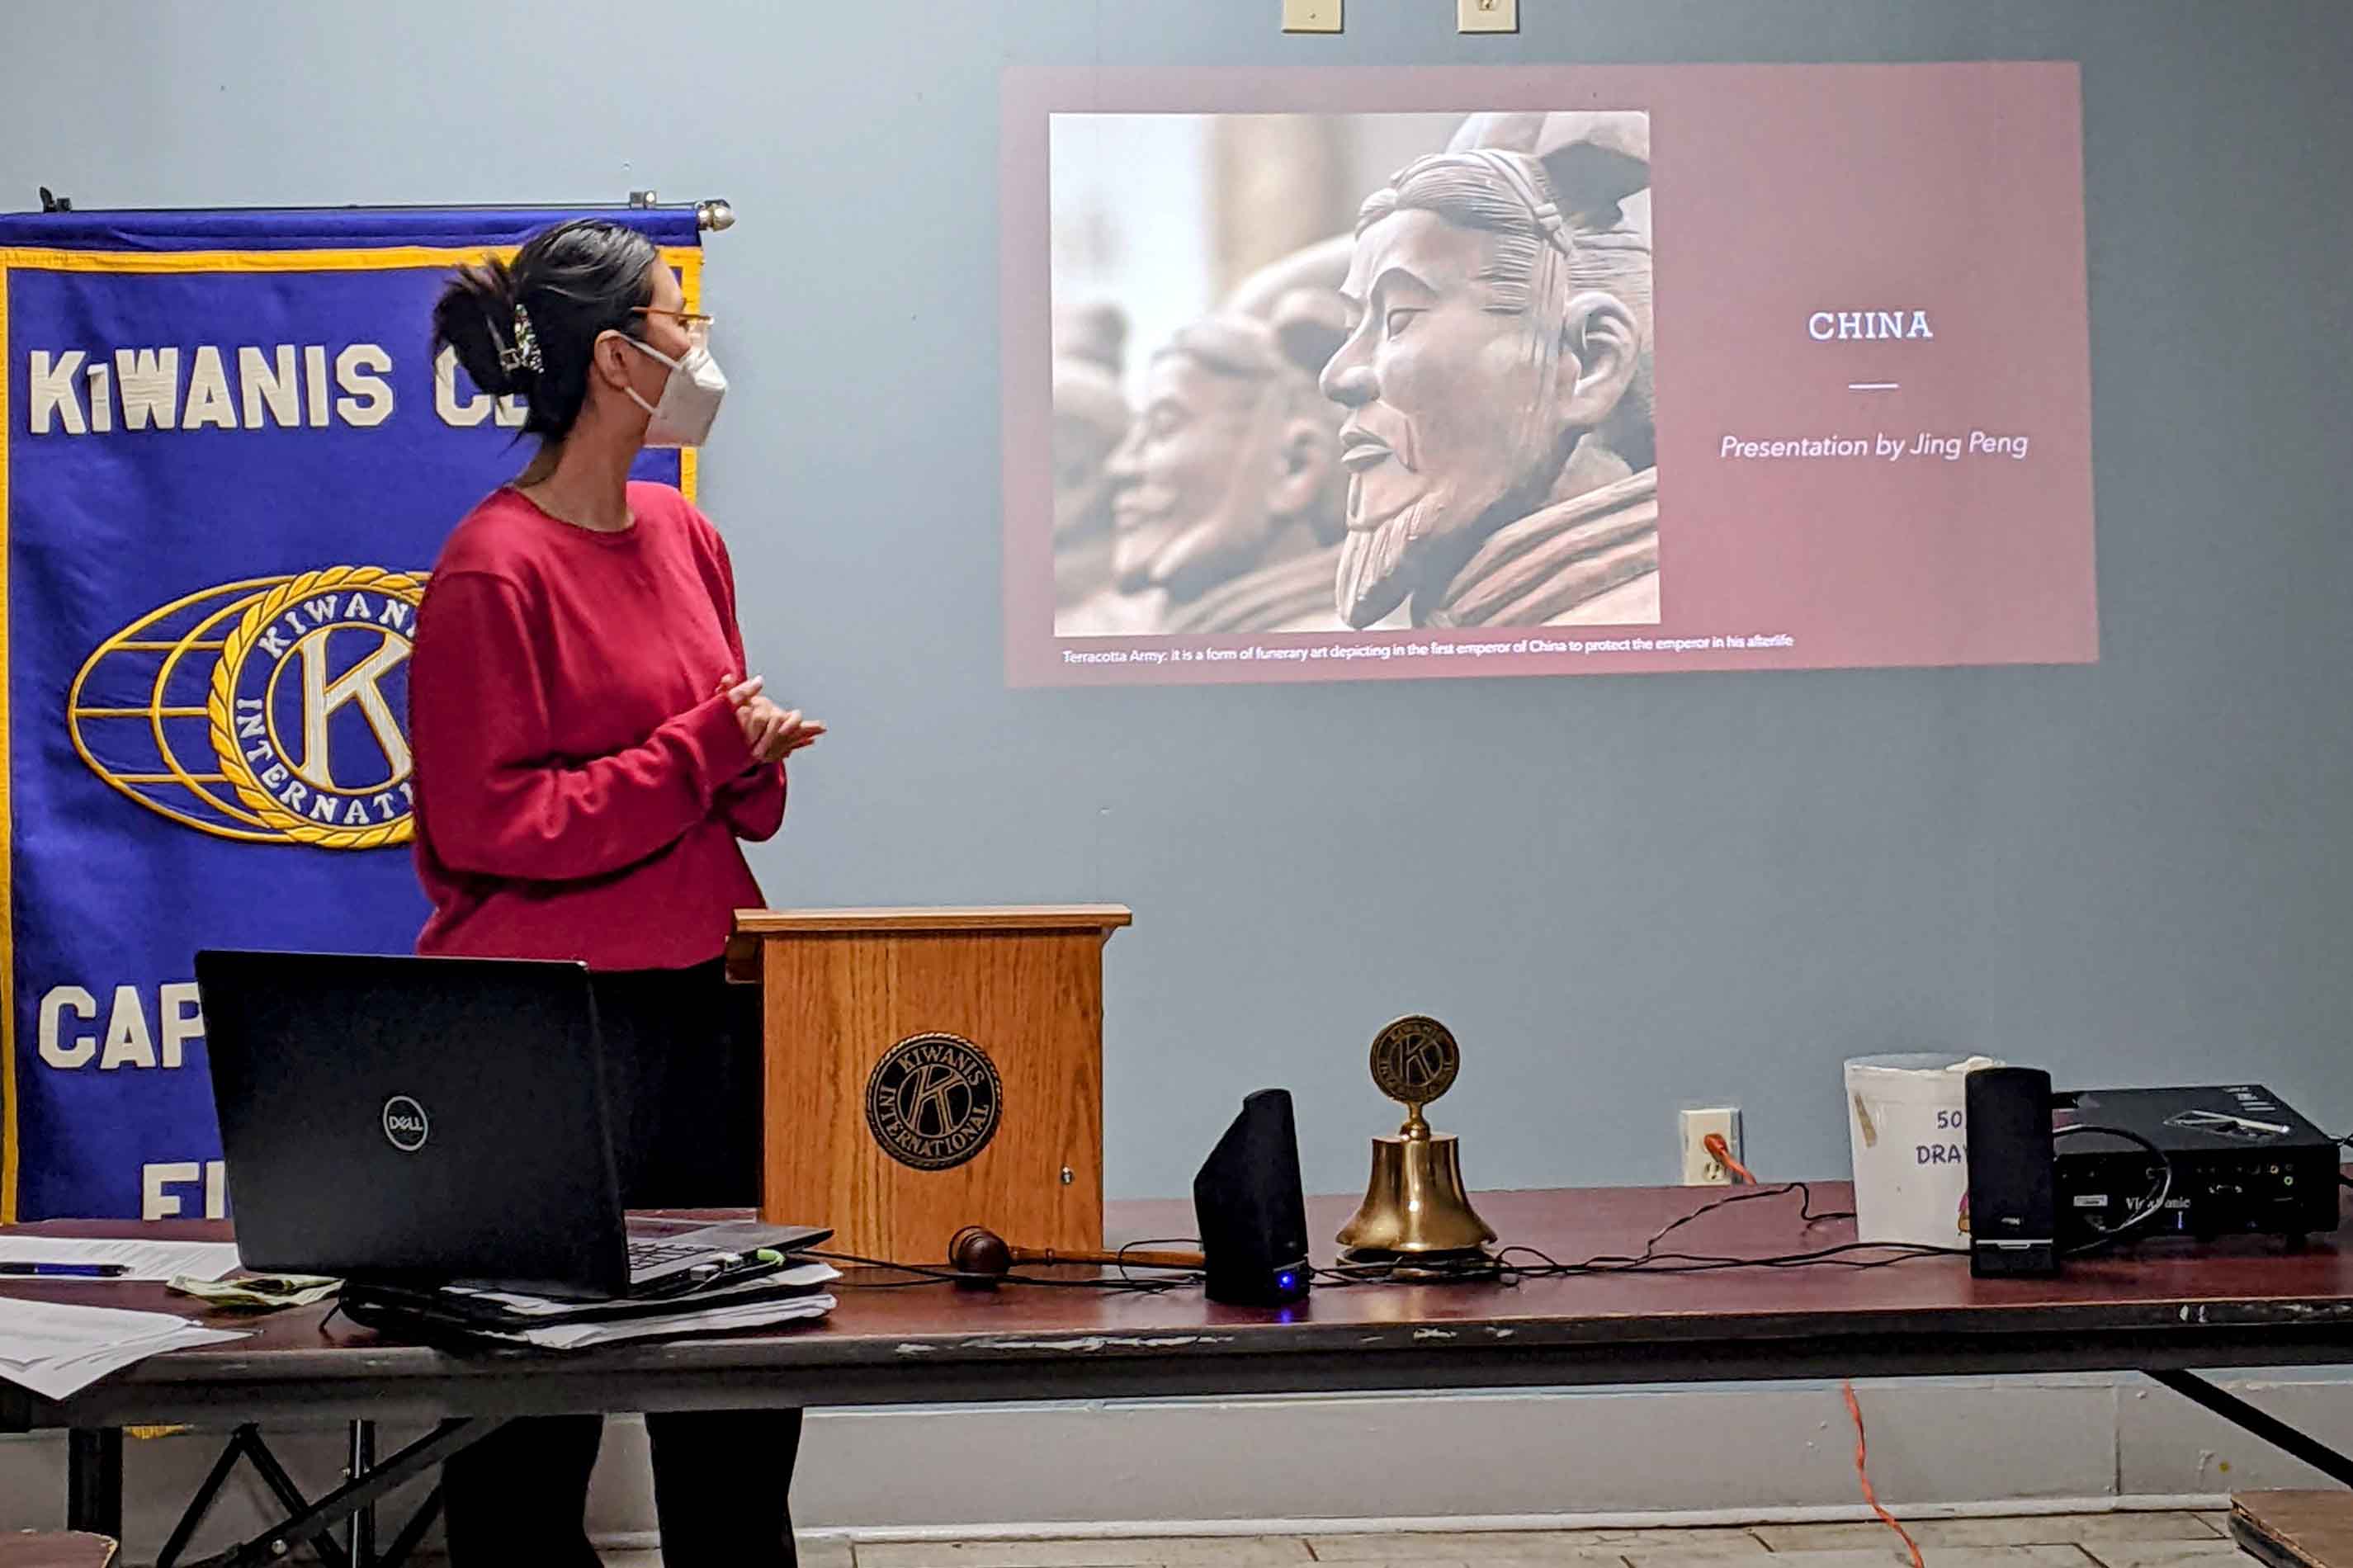 Global Ambassador Jing Peng gives presentation about China to Kiwanis Club.